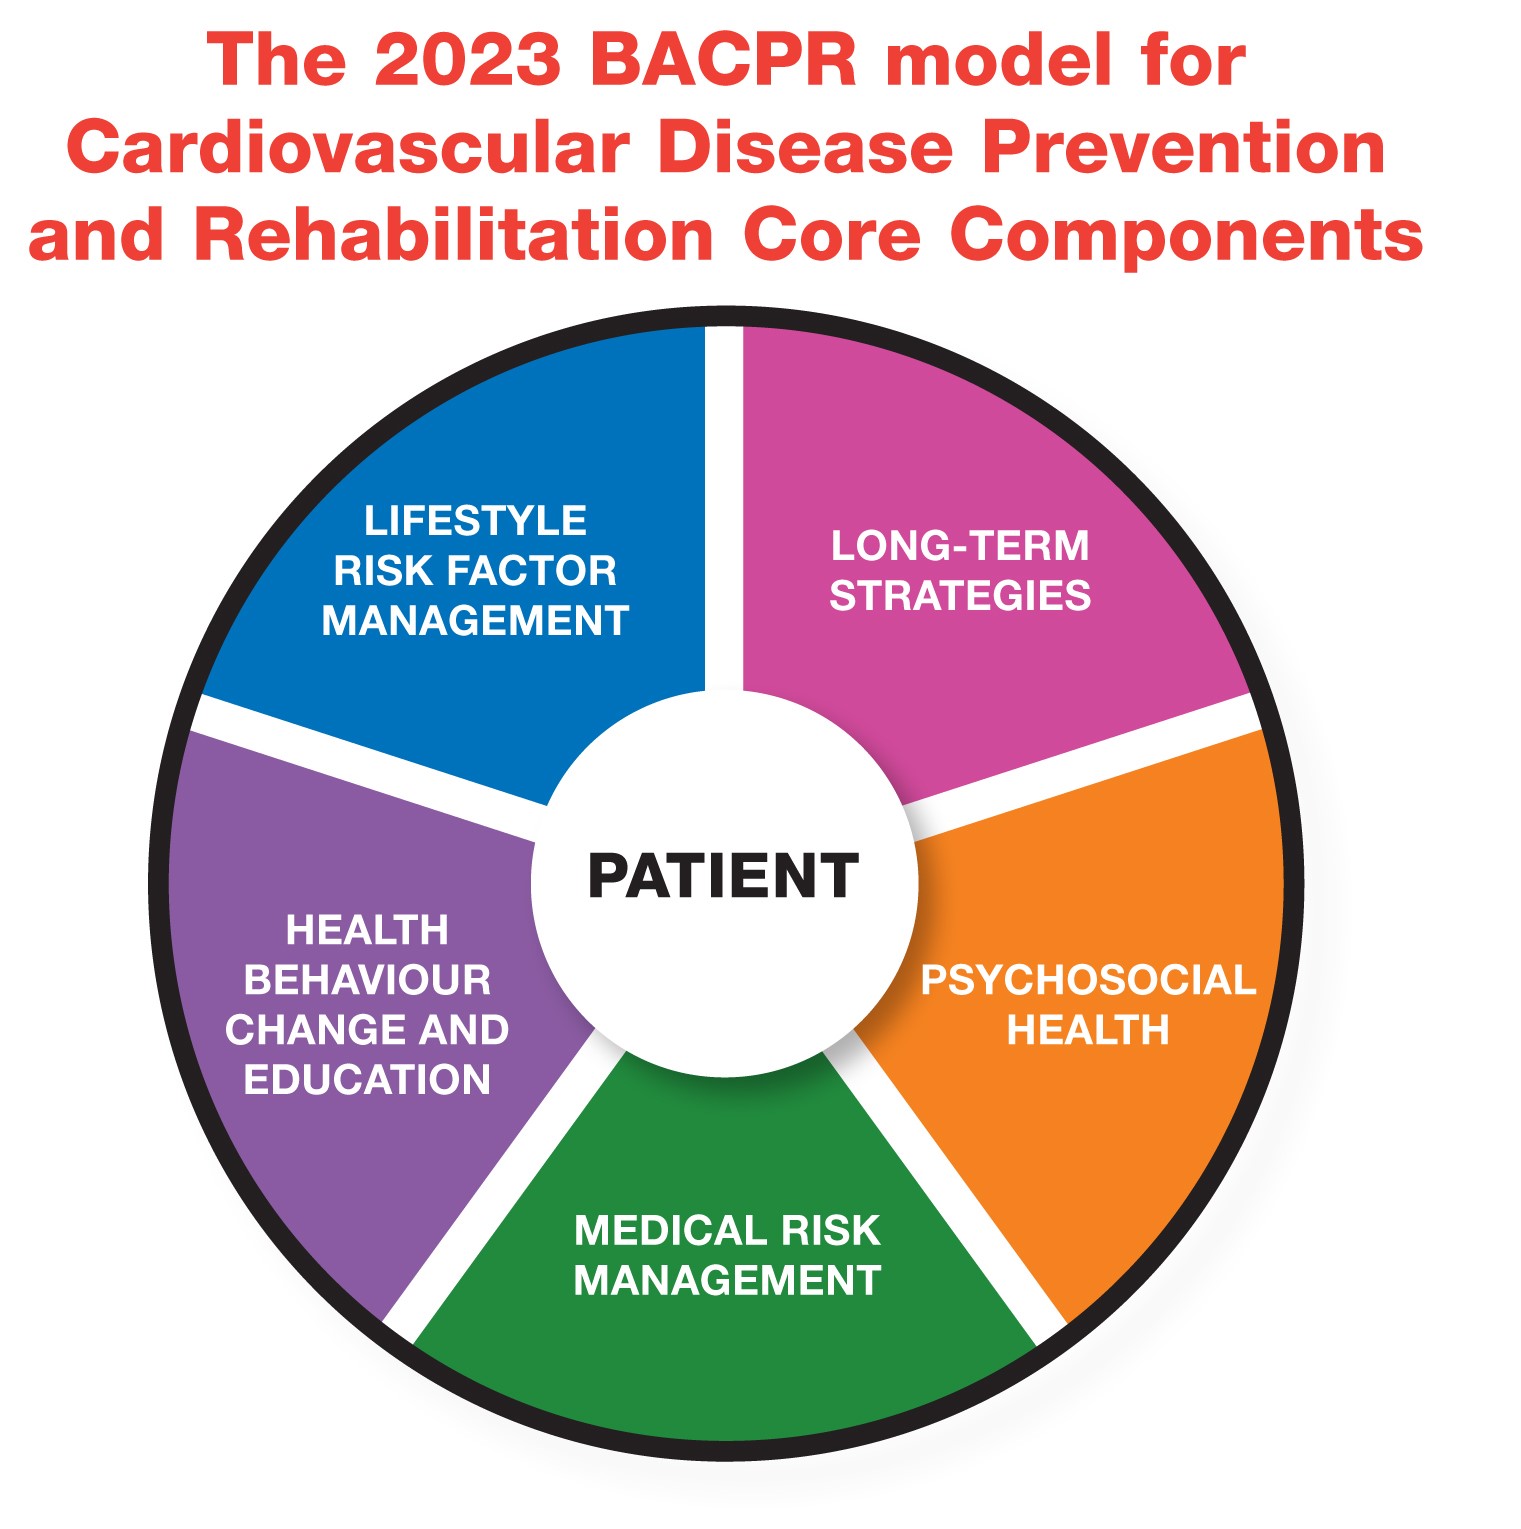 BACPR 2023 model